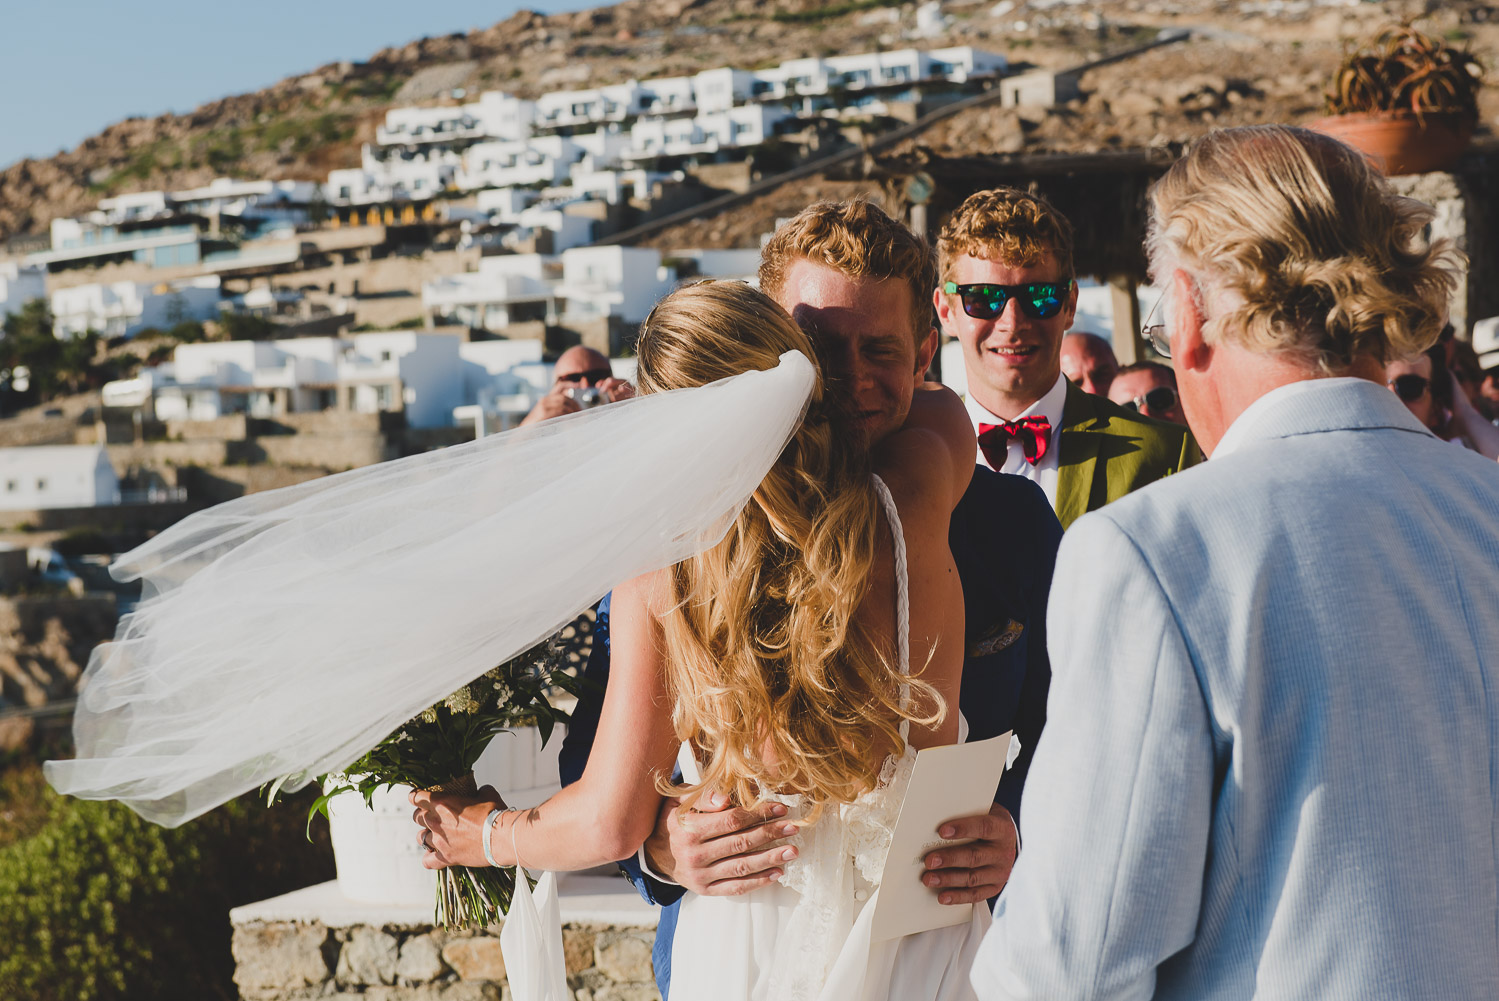 Wedding photographer Mykonos: bride and groom hug with her veil in the wind during their Mykonos wedding.